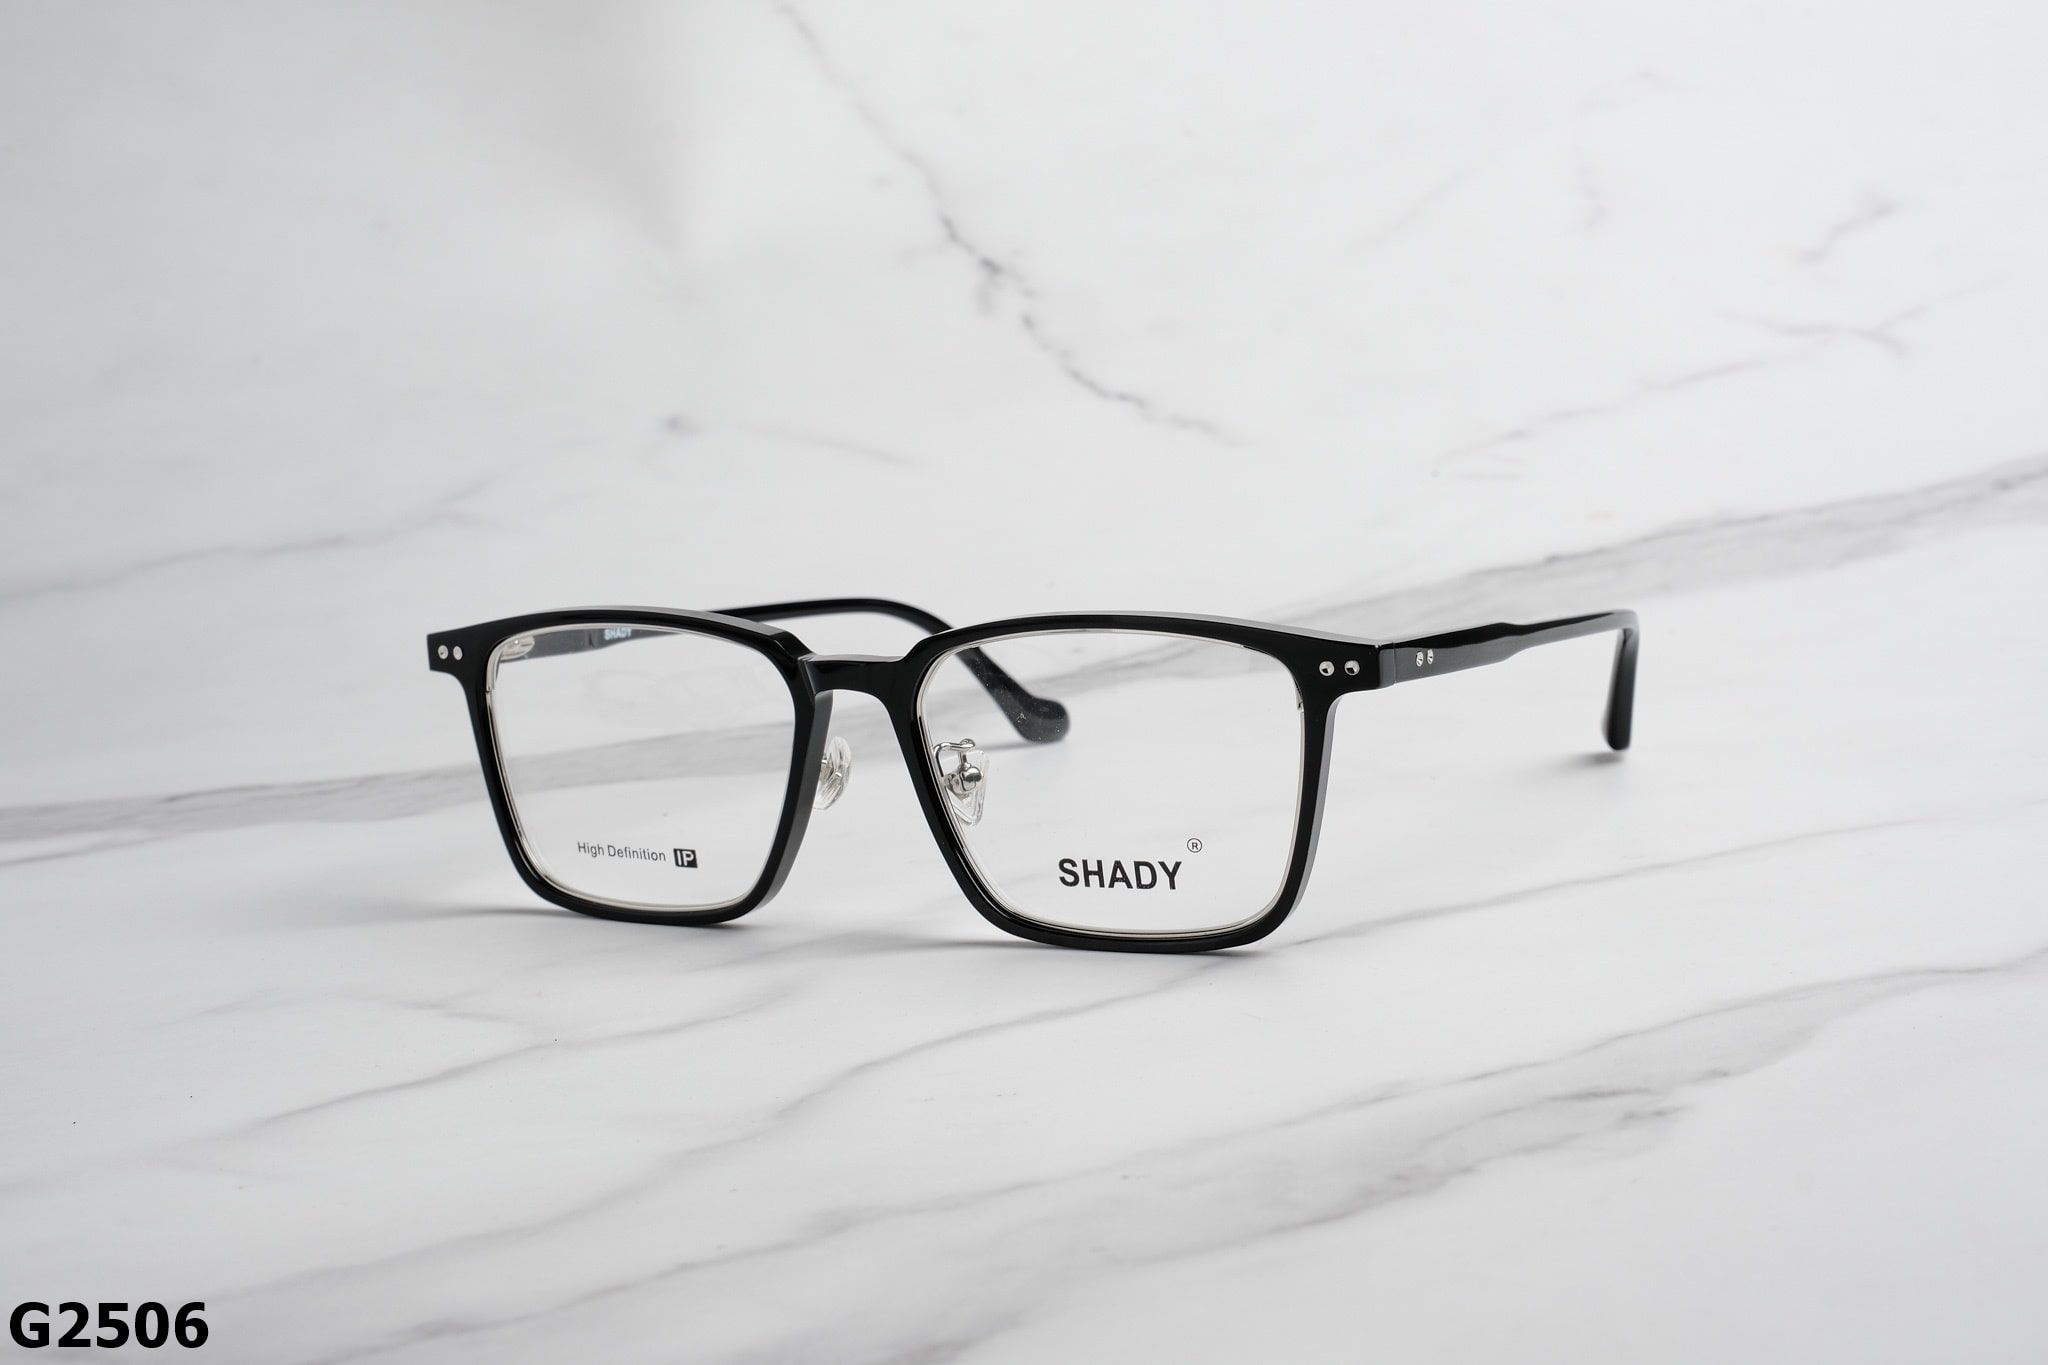  SHADY Eyewear - Glasses - G2506 